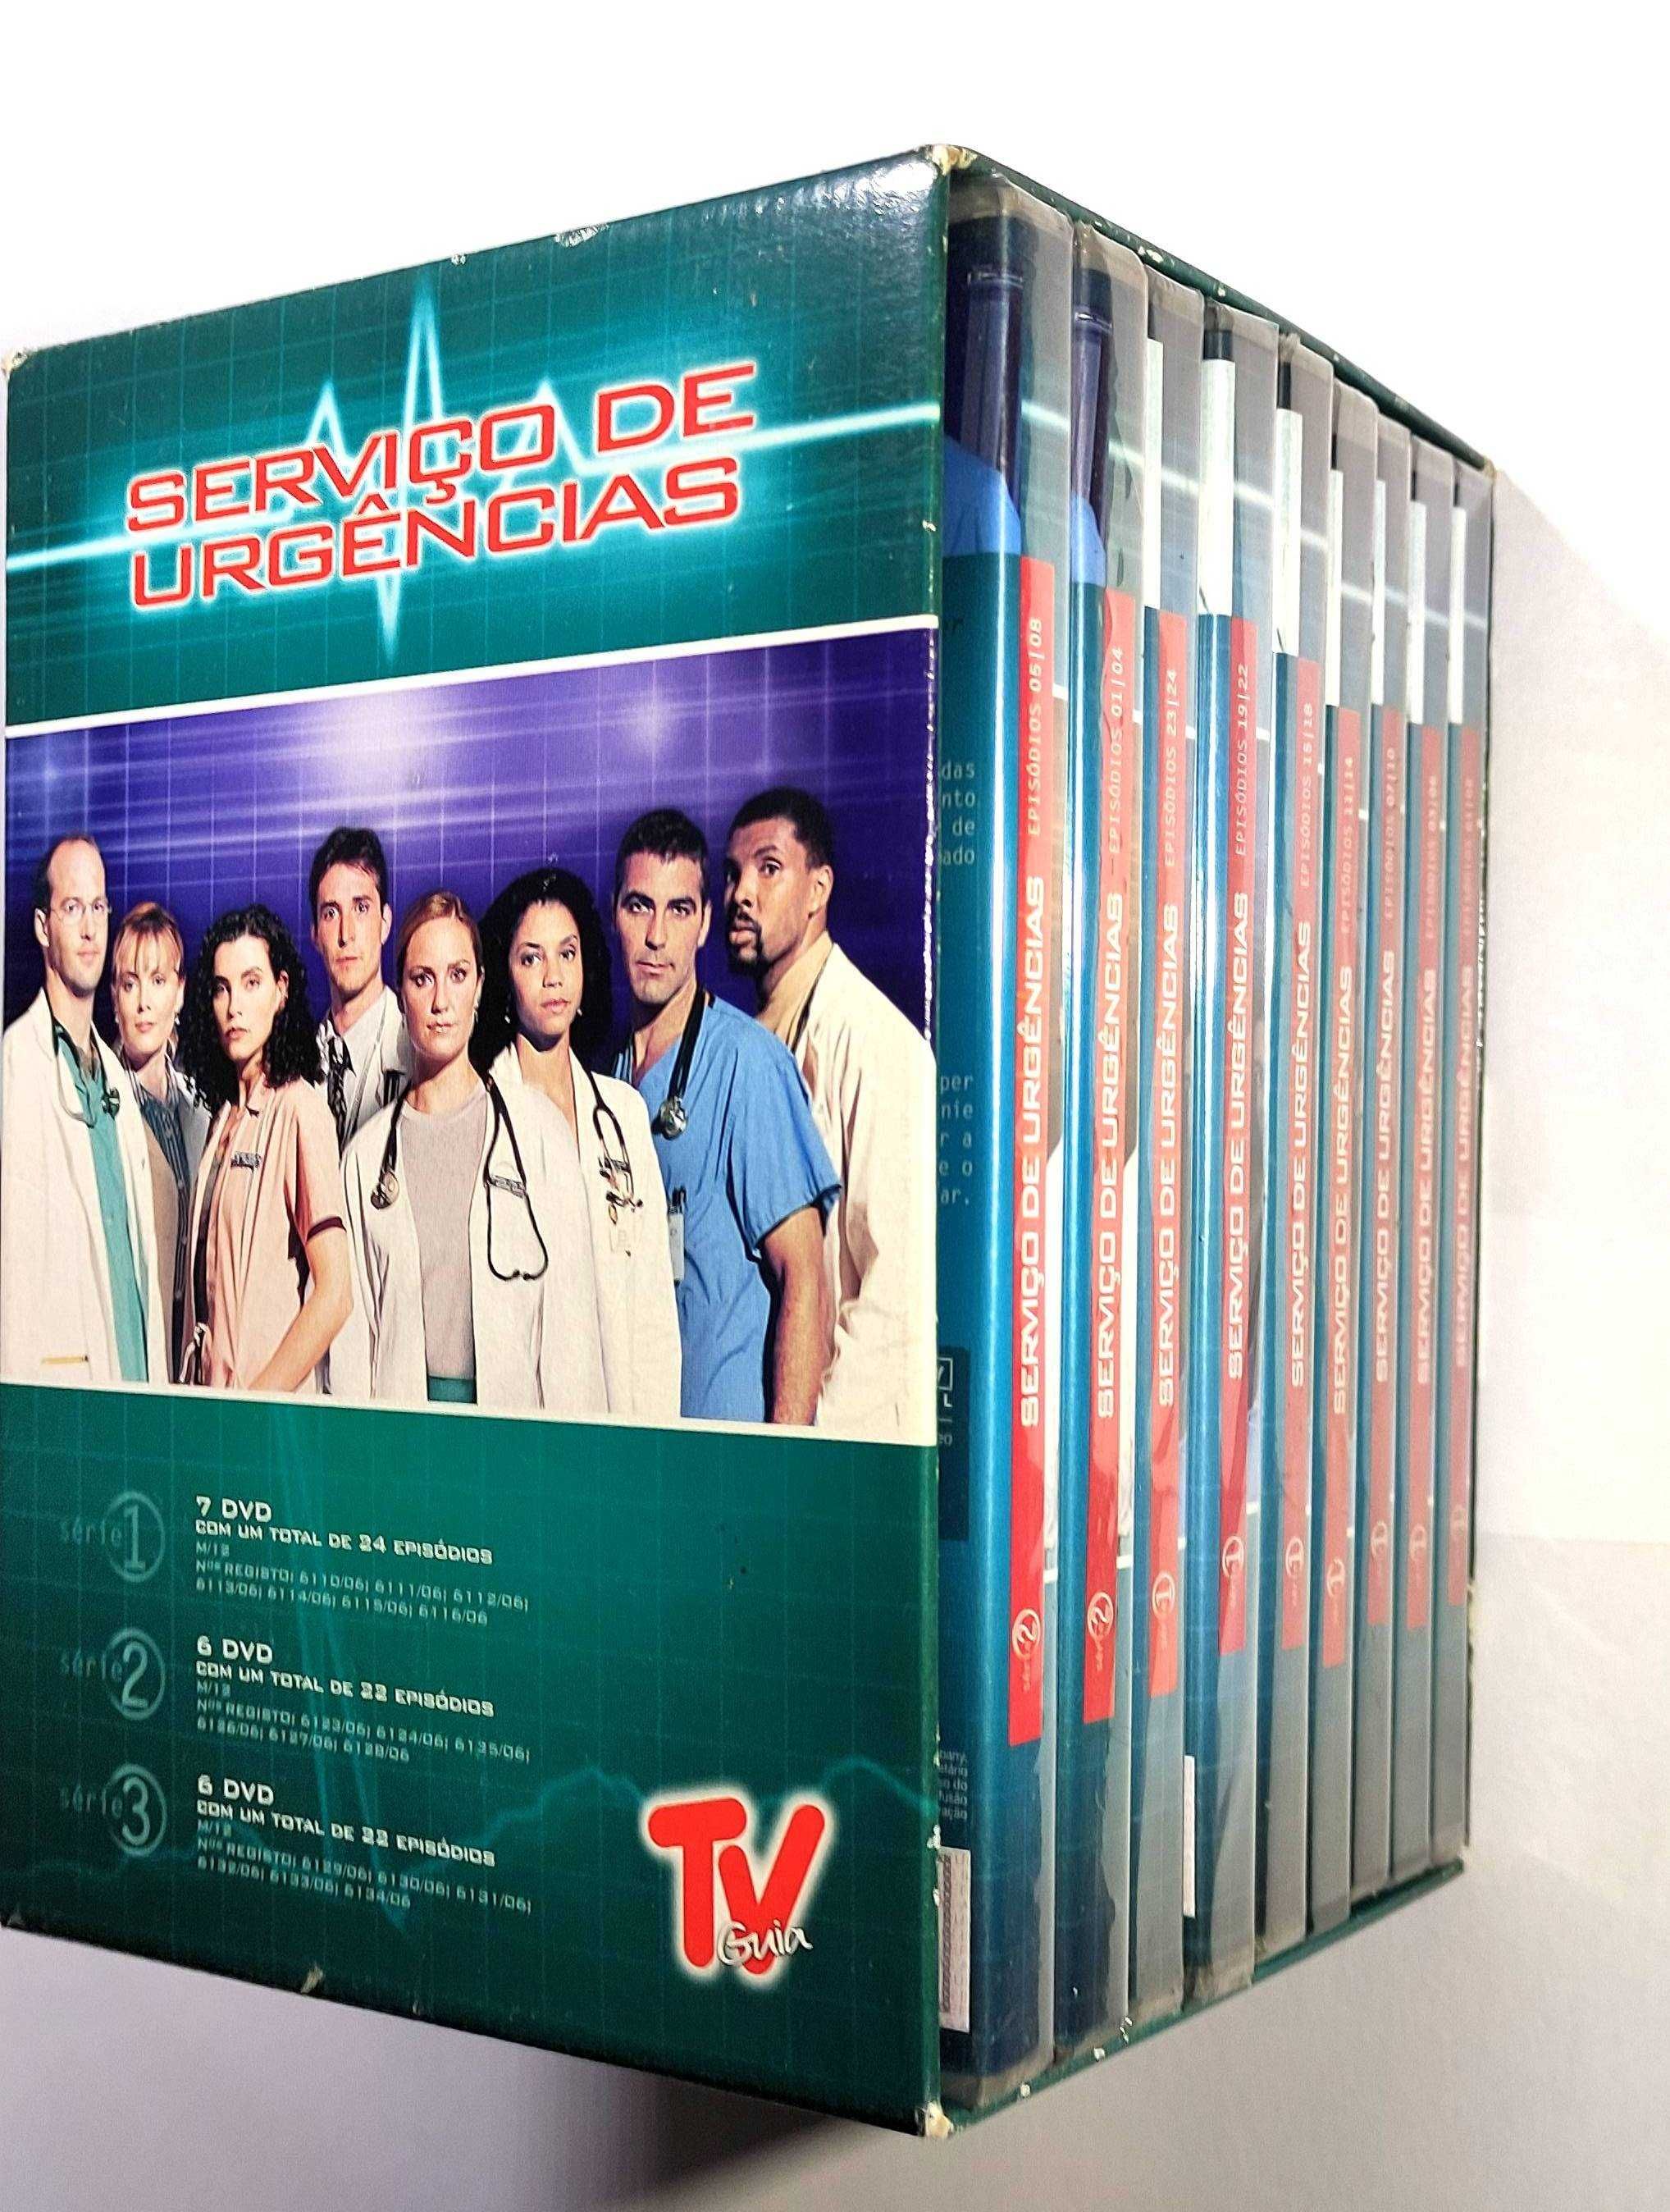 DVD's Serie TV Serviço de Urgência Serie 1 (1 a 24), Serie 2 (1 a 8)